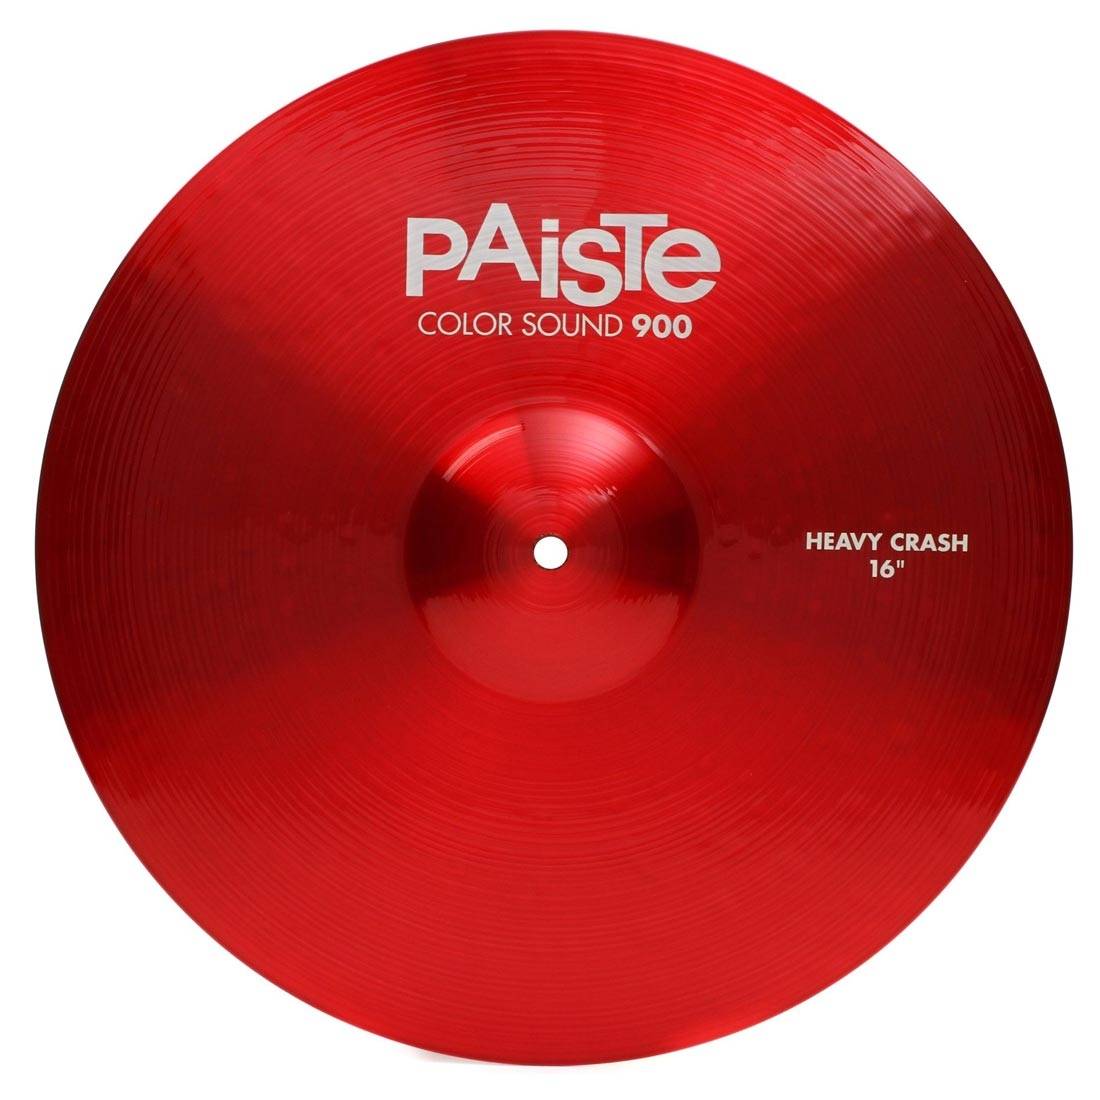 PAISTE 900 Color Sound 16'' Red Heavy Crash